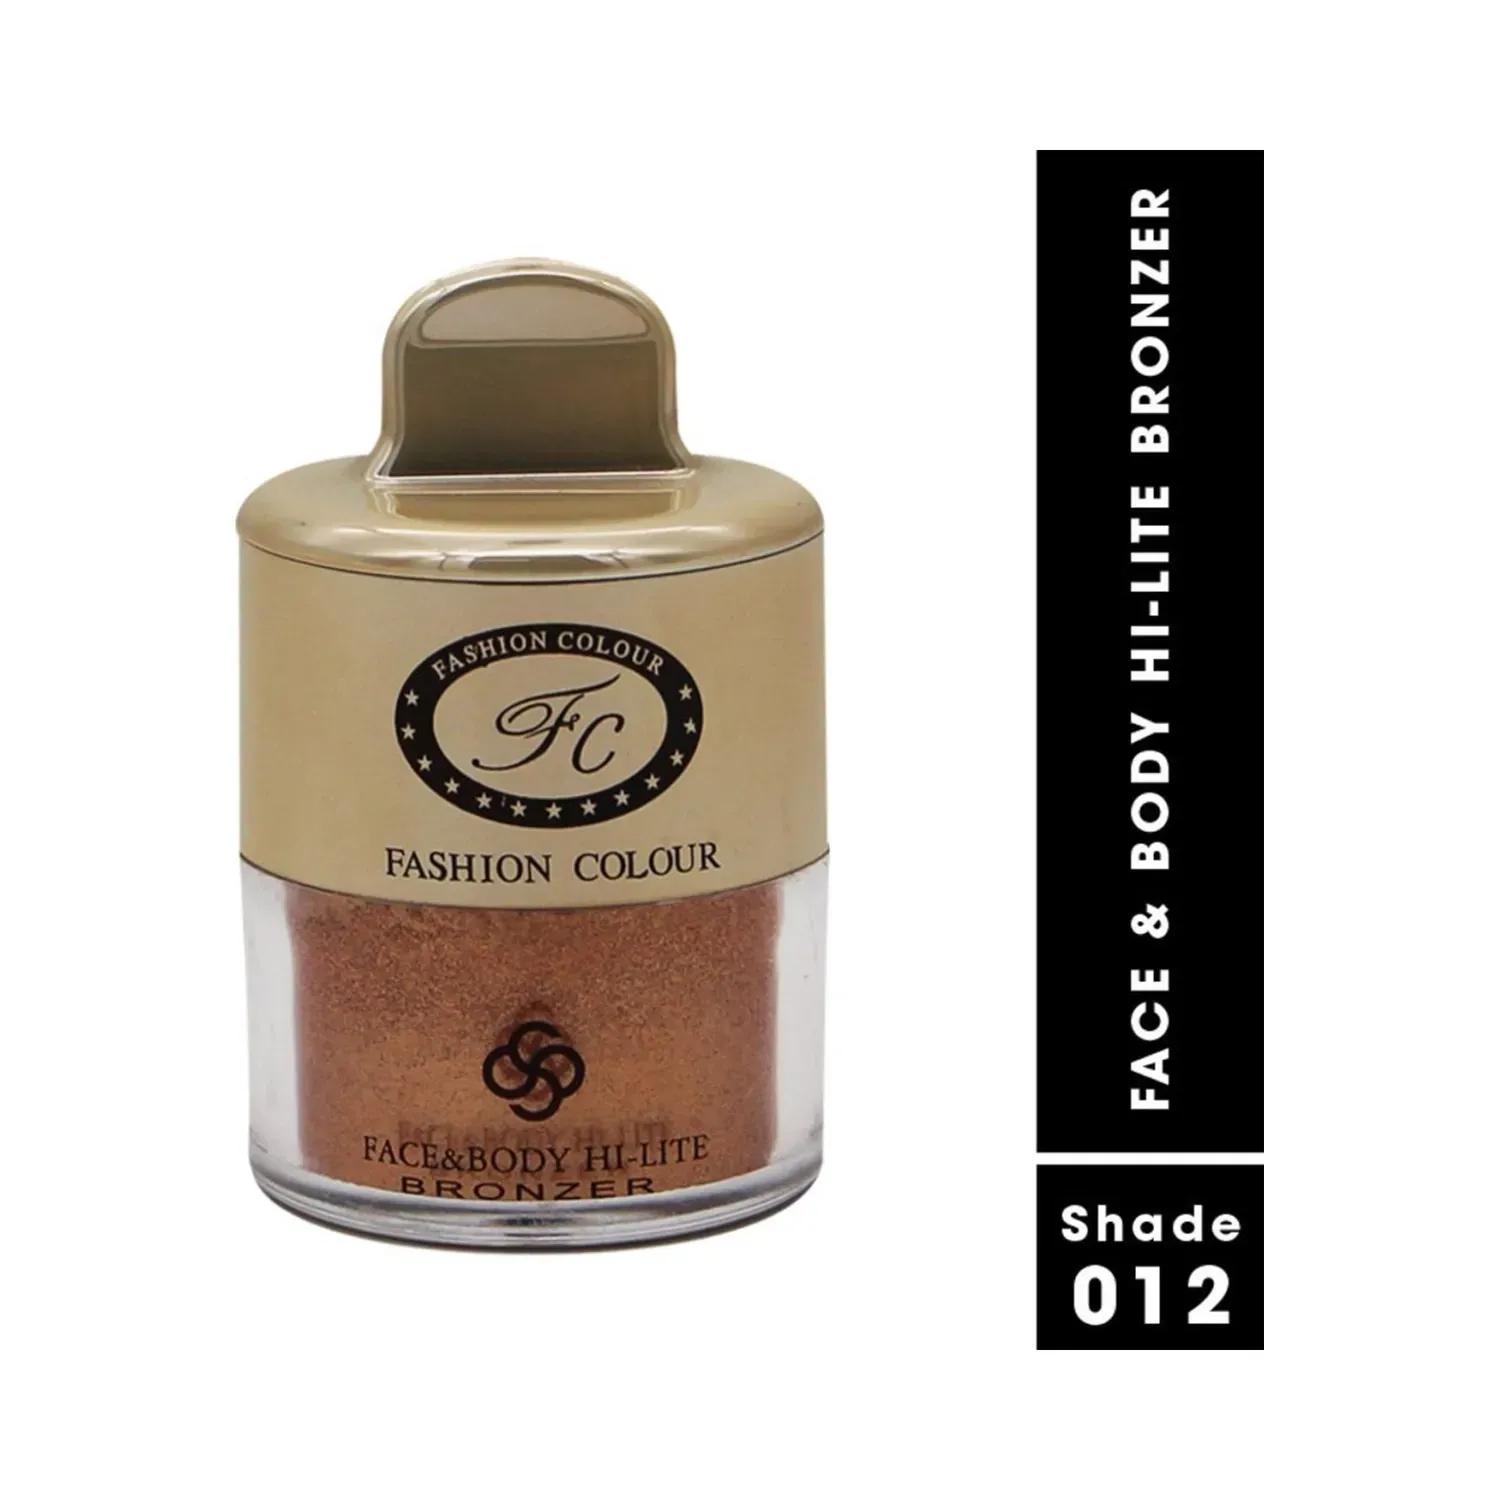 fashion colour face & body hi-lite bronzer - 12 shade (4g)